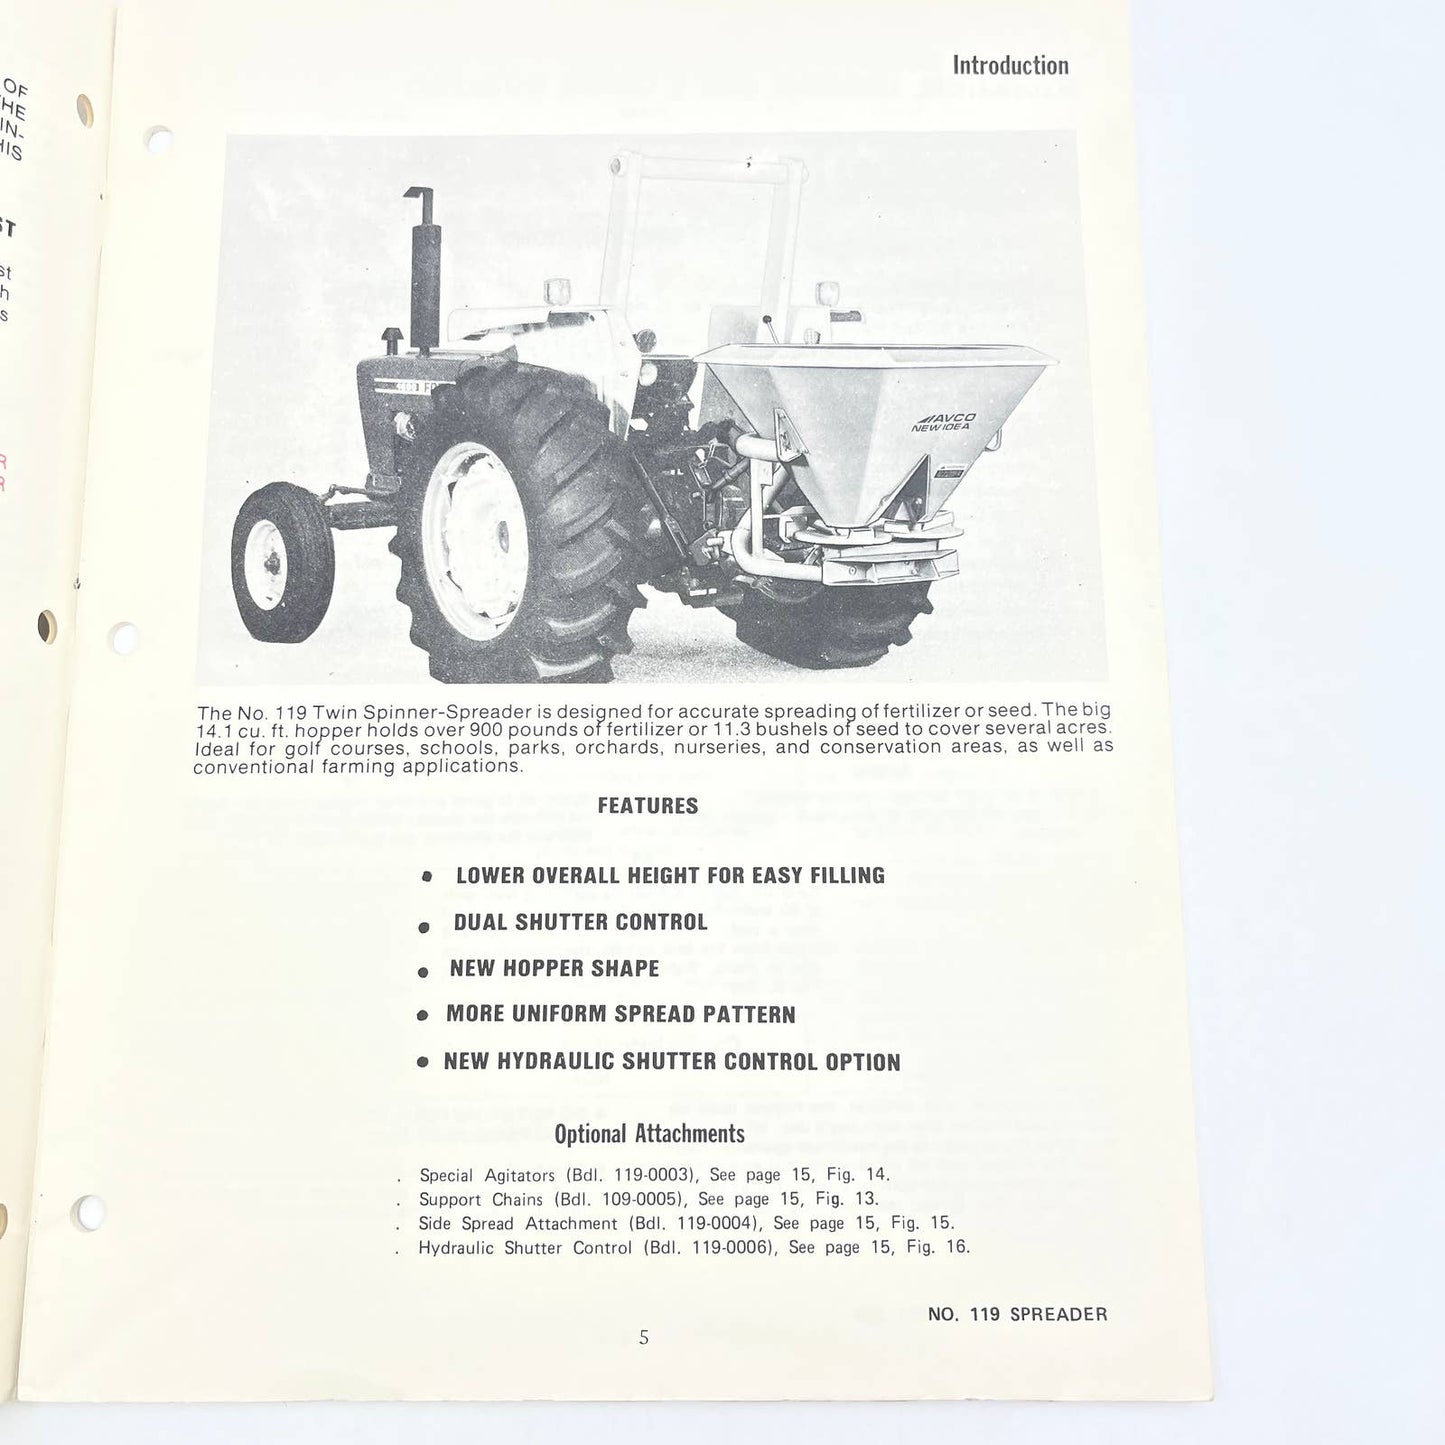 Original 1980 New Idea Manual FS-120 119 3 Point Hitch Spinner Fertilizer TB9